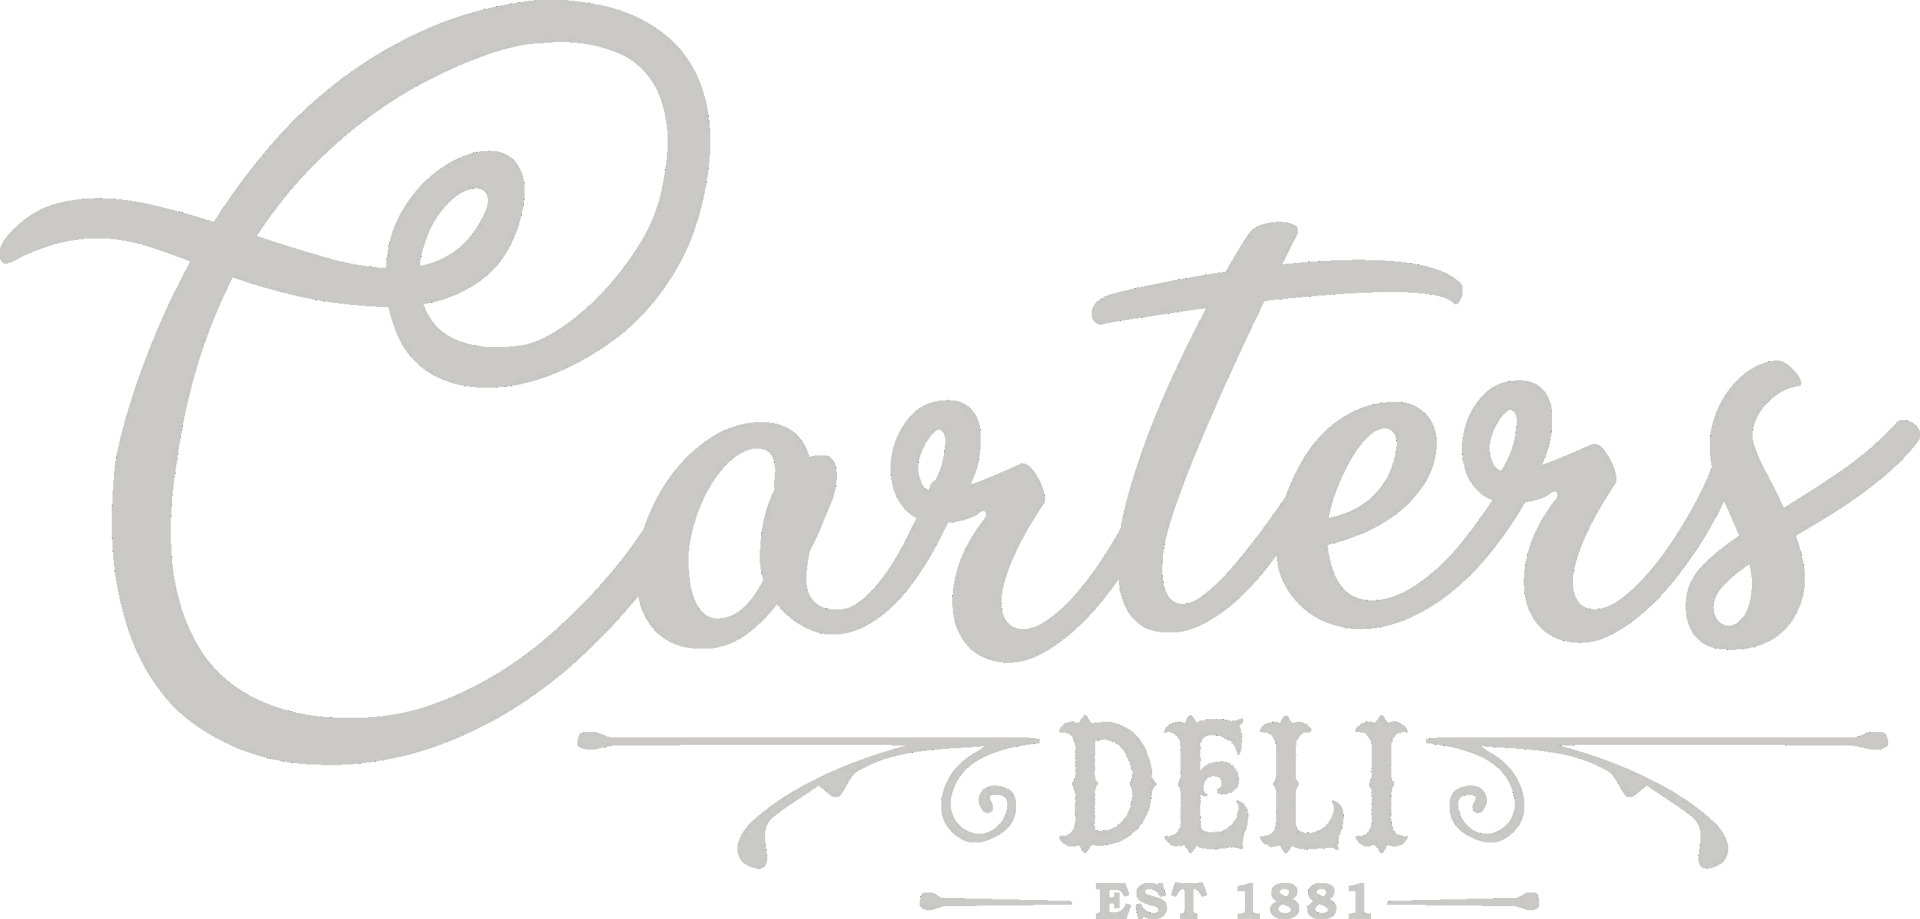 Carters Deli Ltd Logo